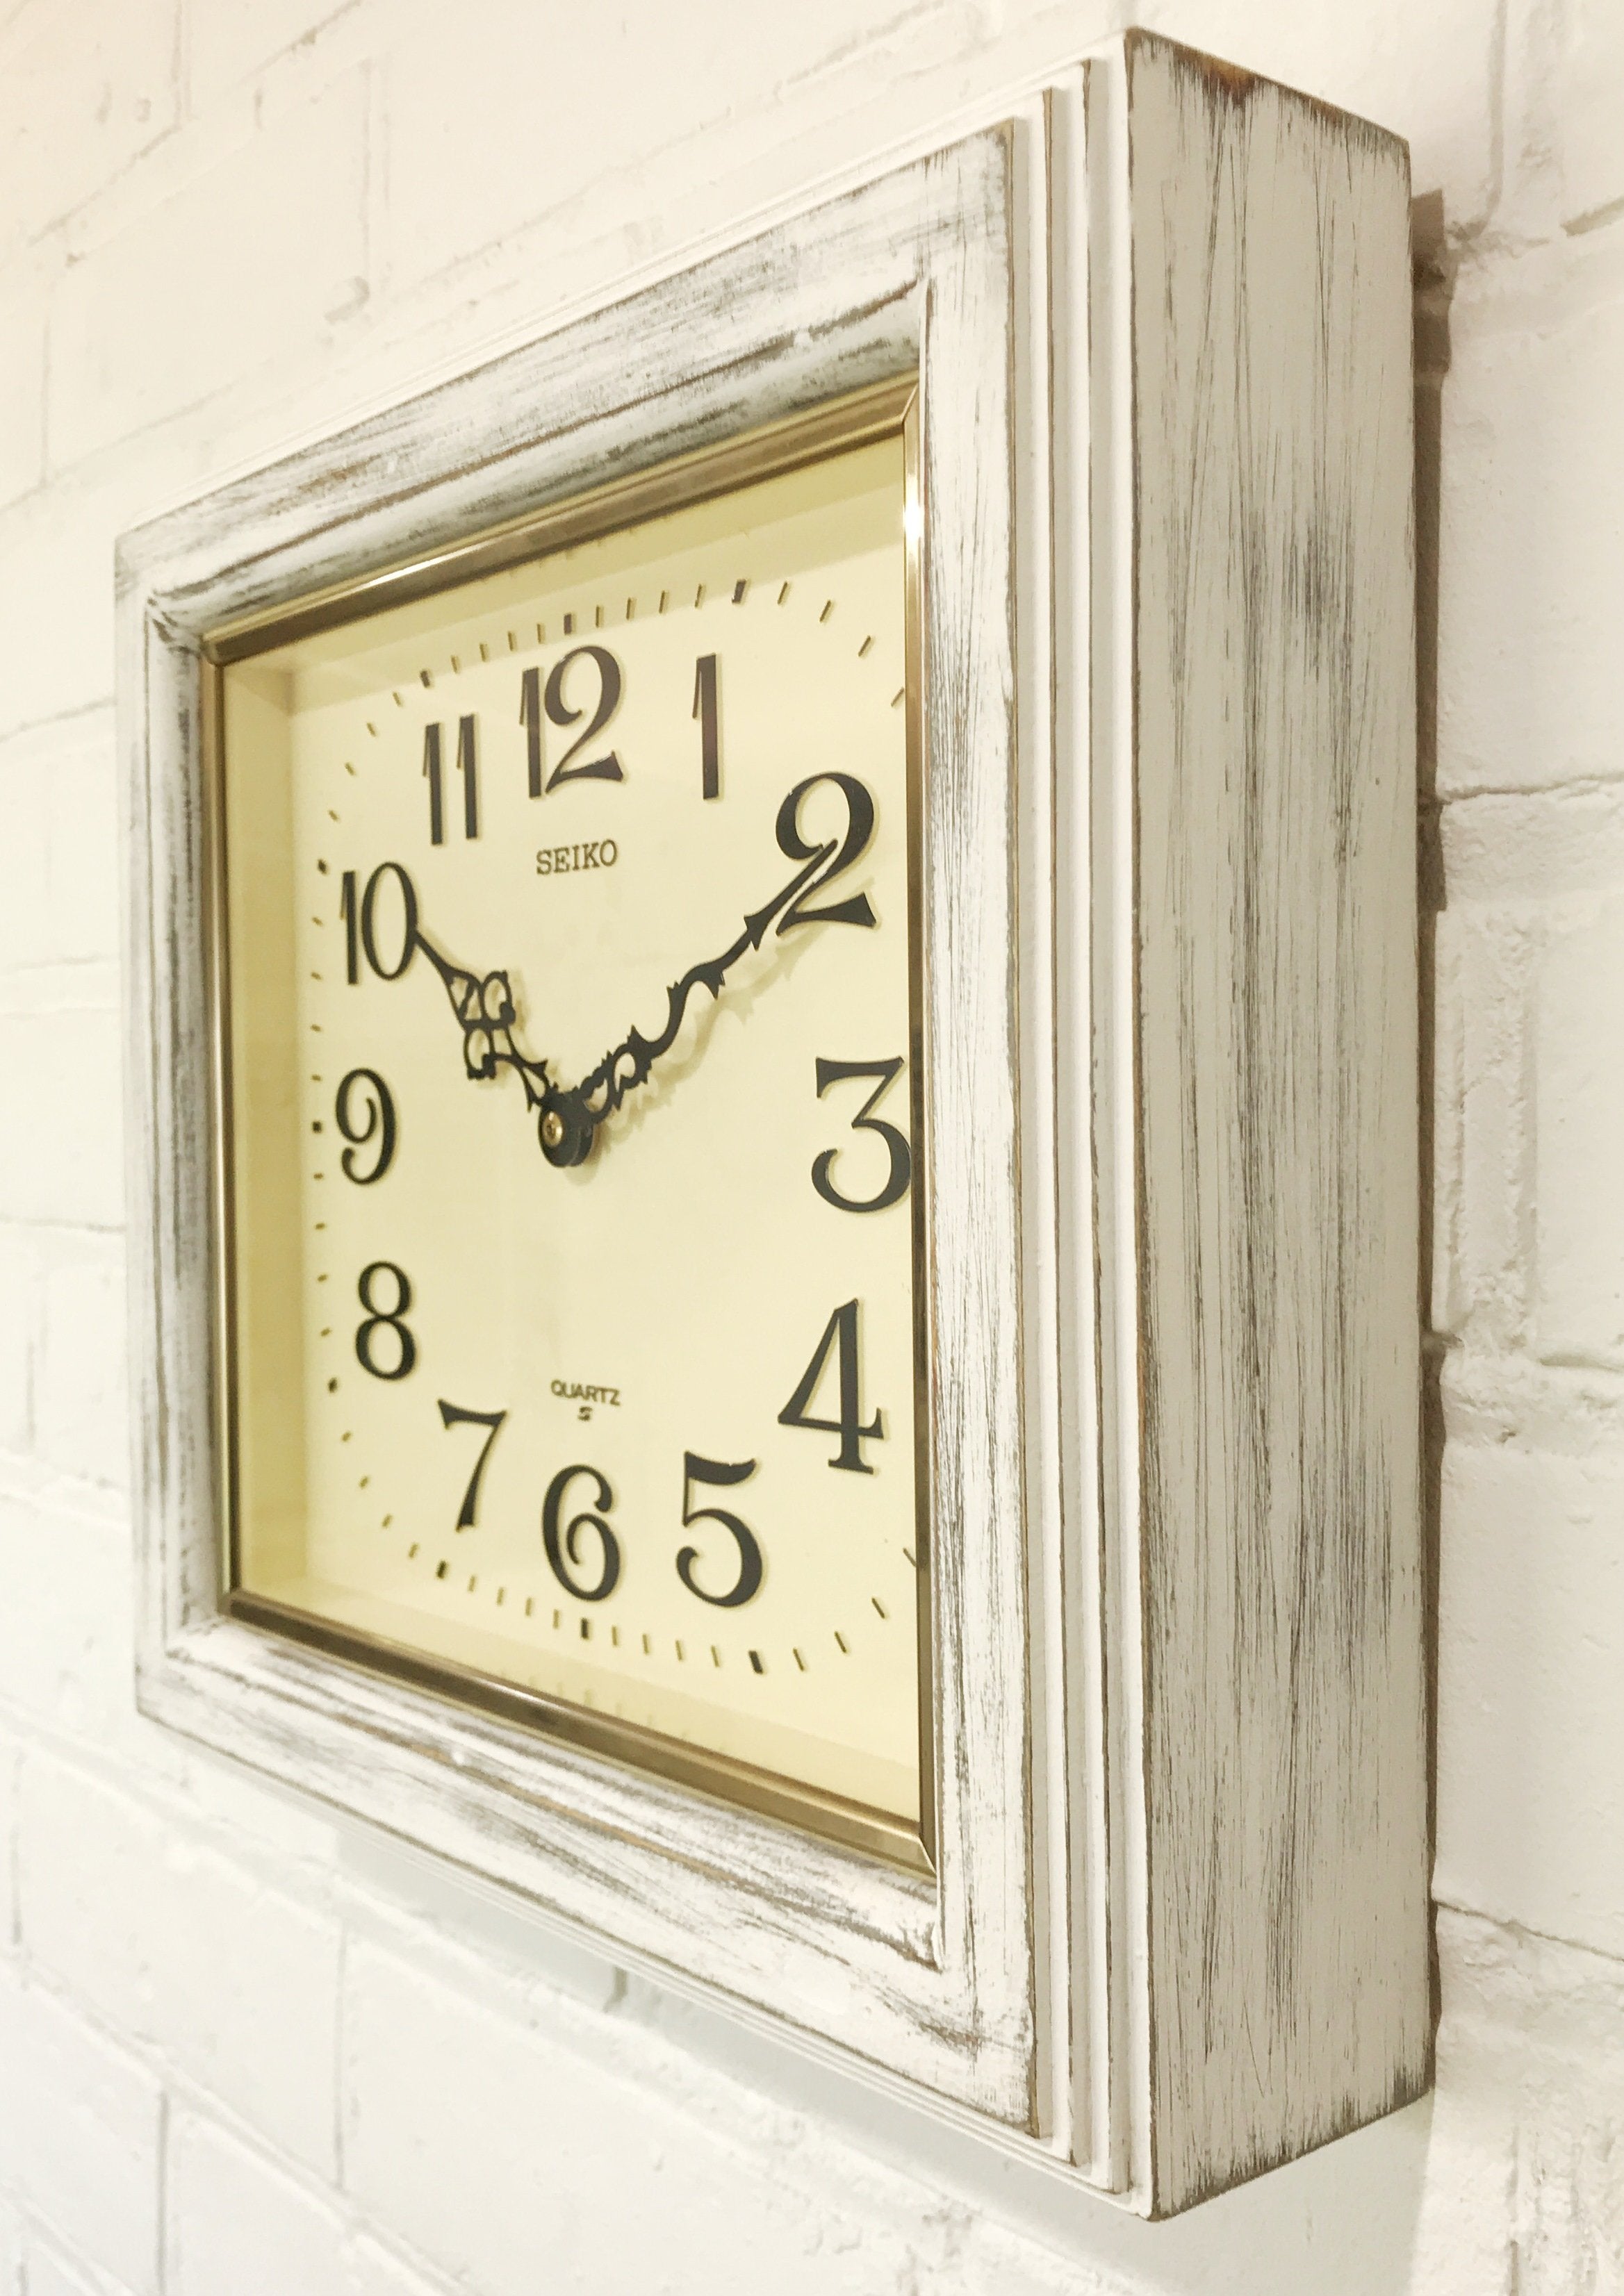 Vintage Seiko Wall Clock | eXibit collection